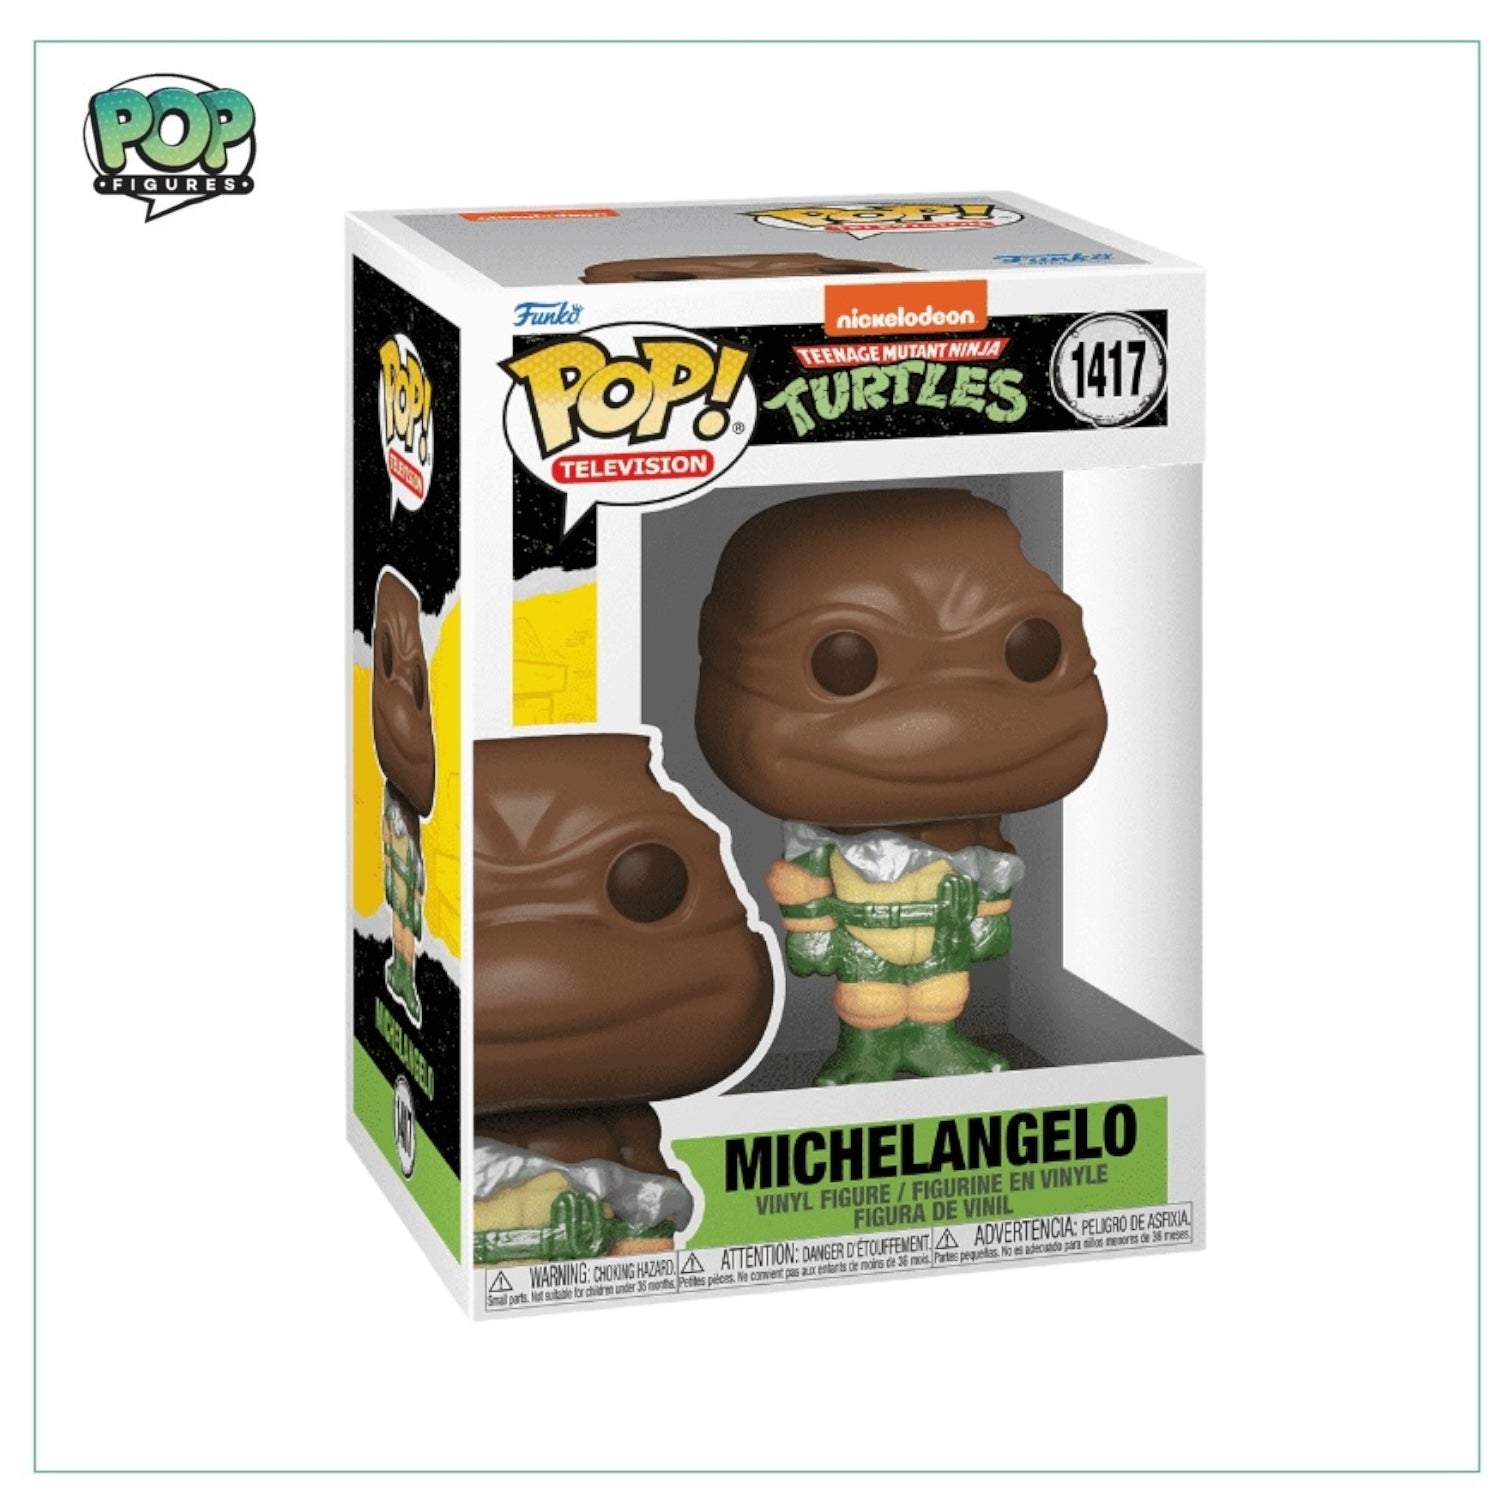 Michelangelo (Chocolate) #1417 Funko Pop! - Teenage Mutant Ninja Turtles